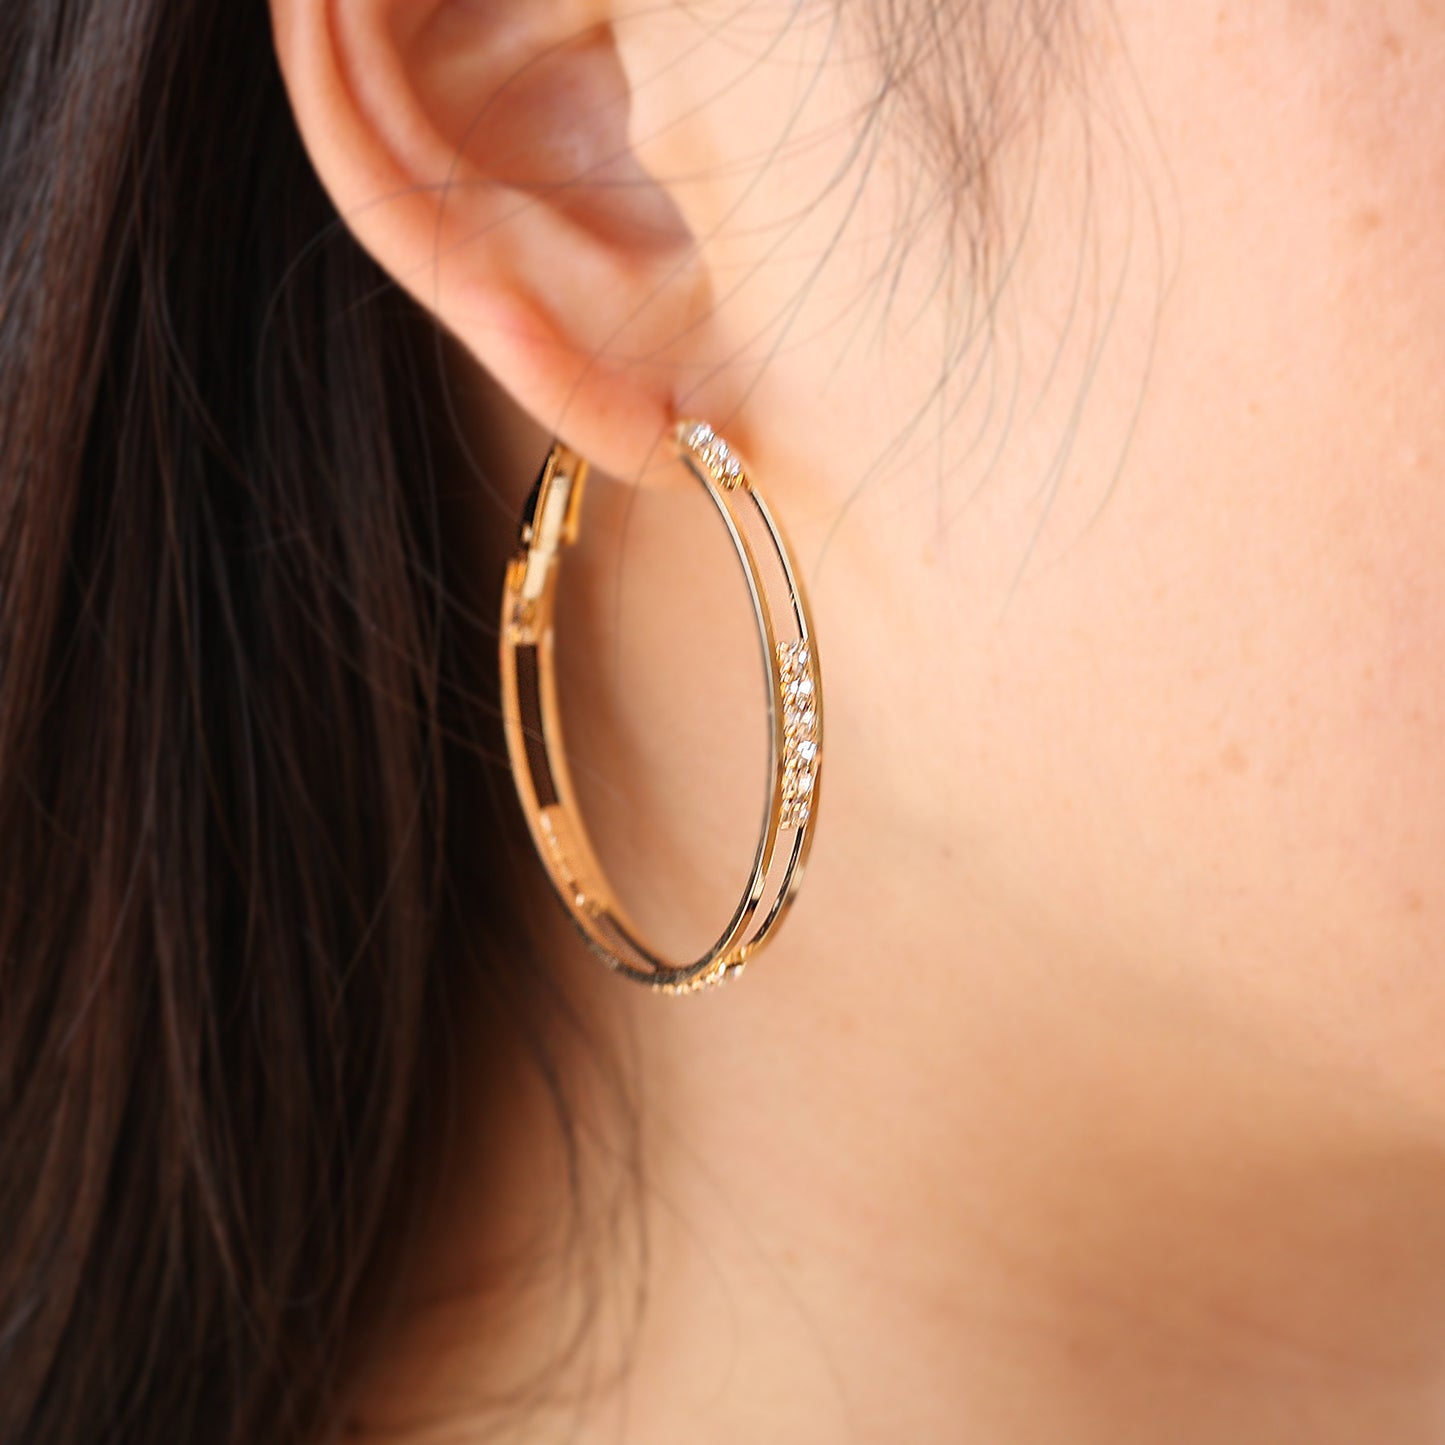 Premium Cubic Zirconia Interval Hoop Earrings - 14K Gold Filled